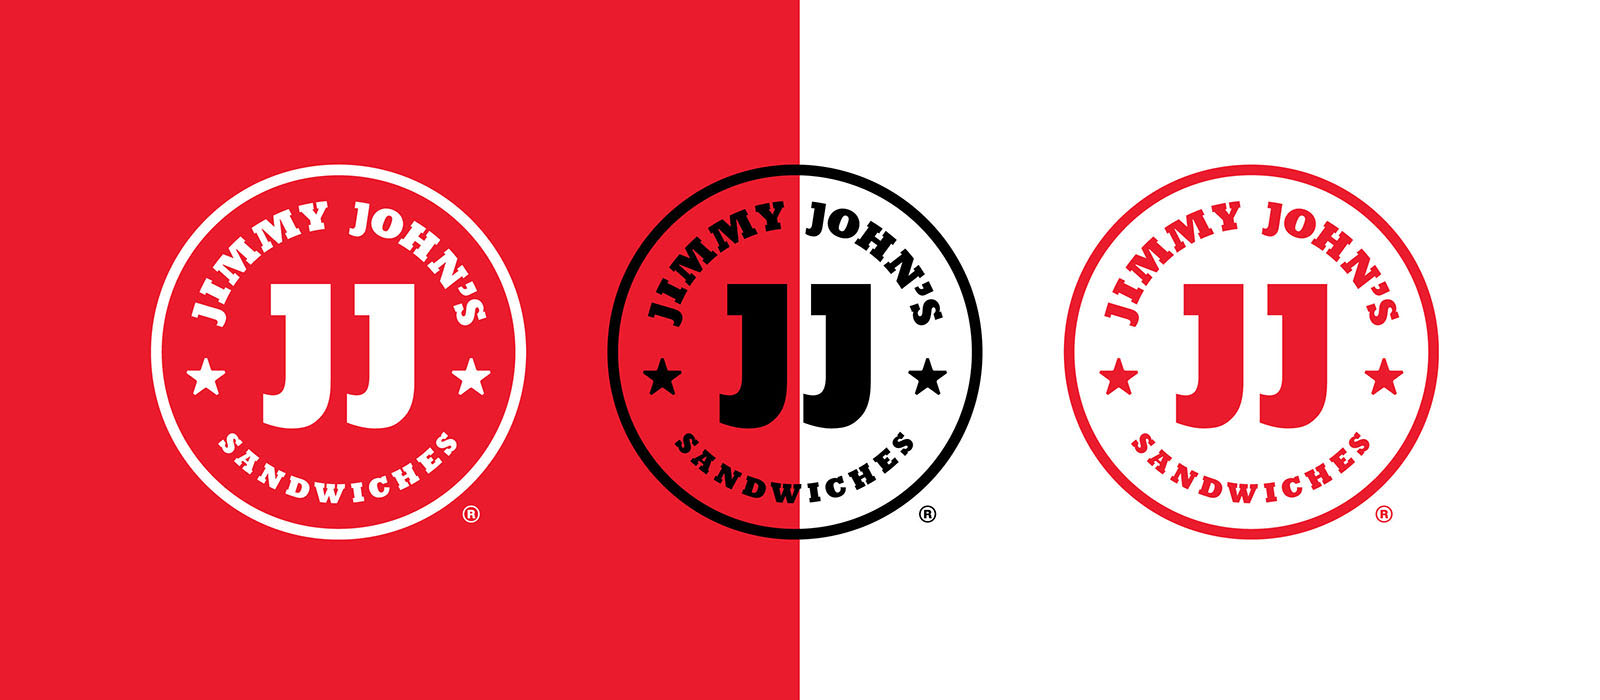 3 Jimmy John's logos